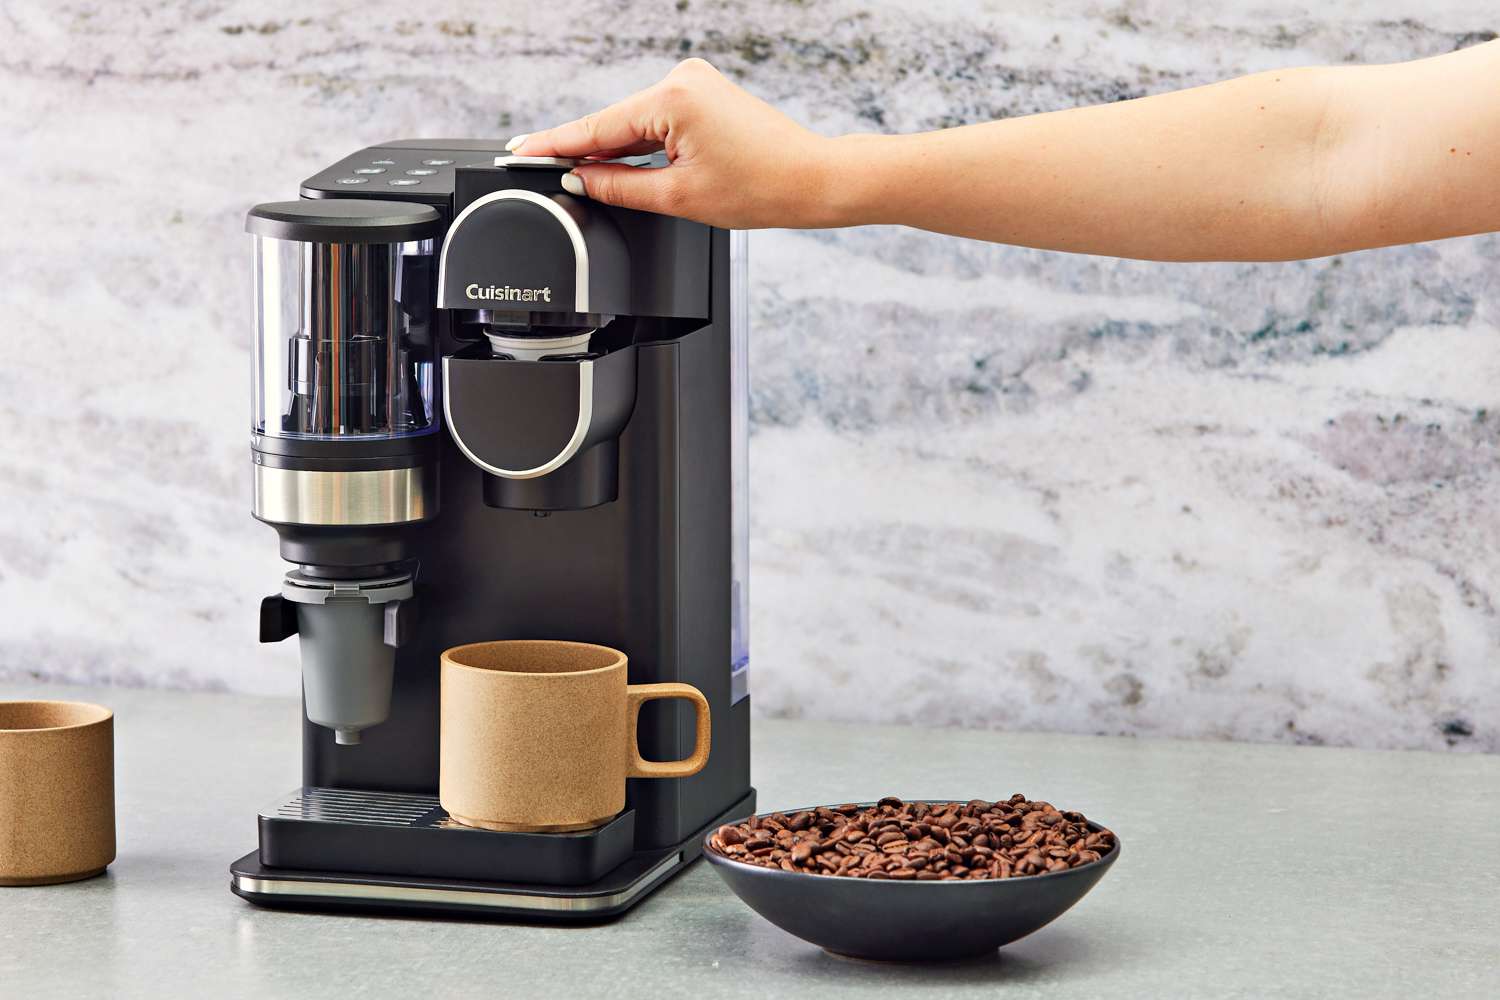 Zulay Magia Super Automatic Coffee Espresso Machine, Elegant Black